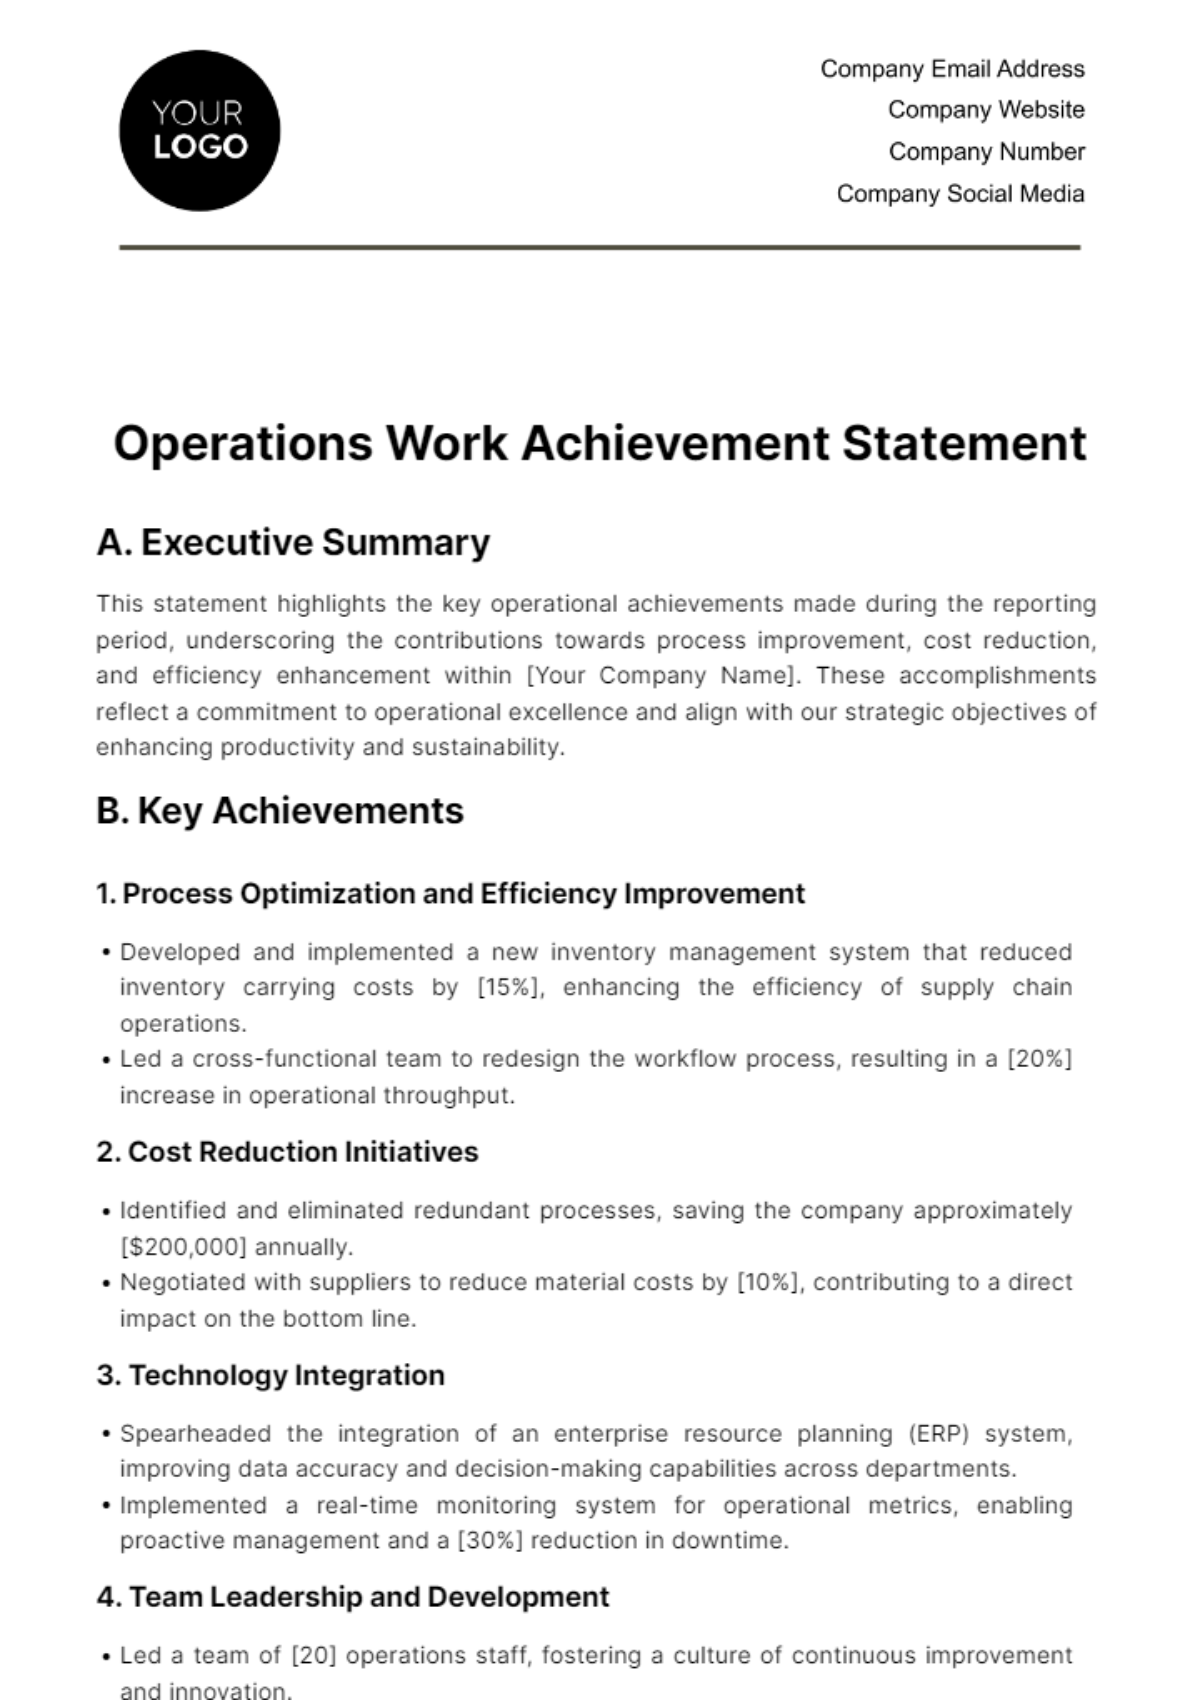 Free Operations Work Achievement Statement Template